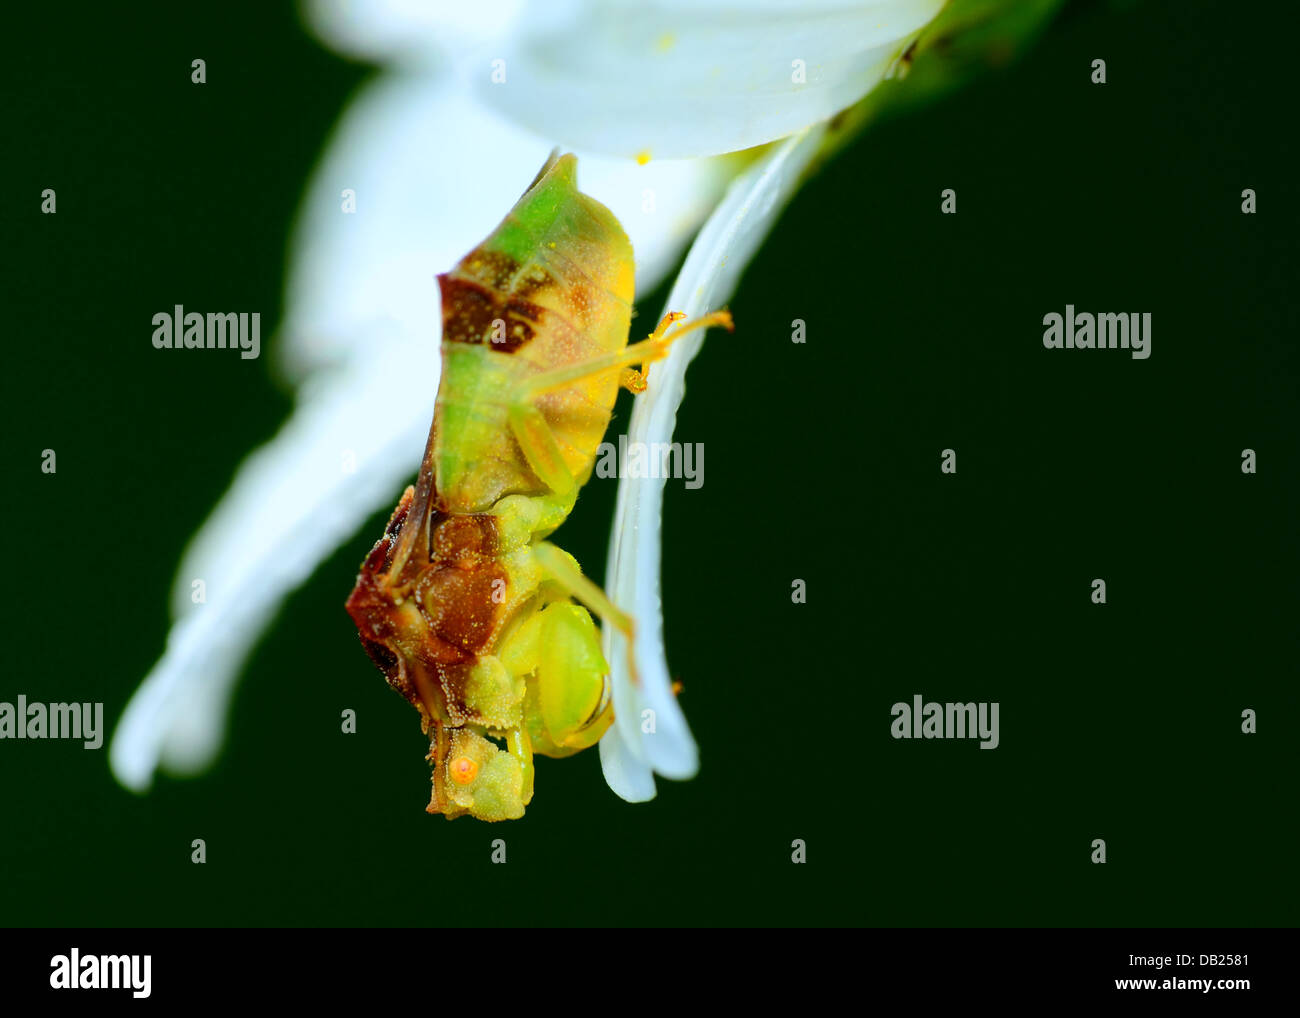 An Ambush Bug perched on a flower petal. Stock Photo